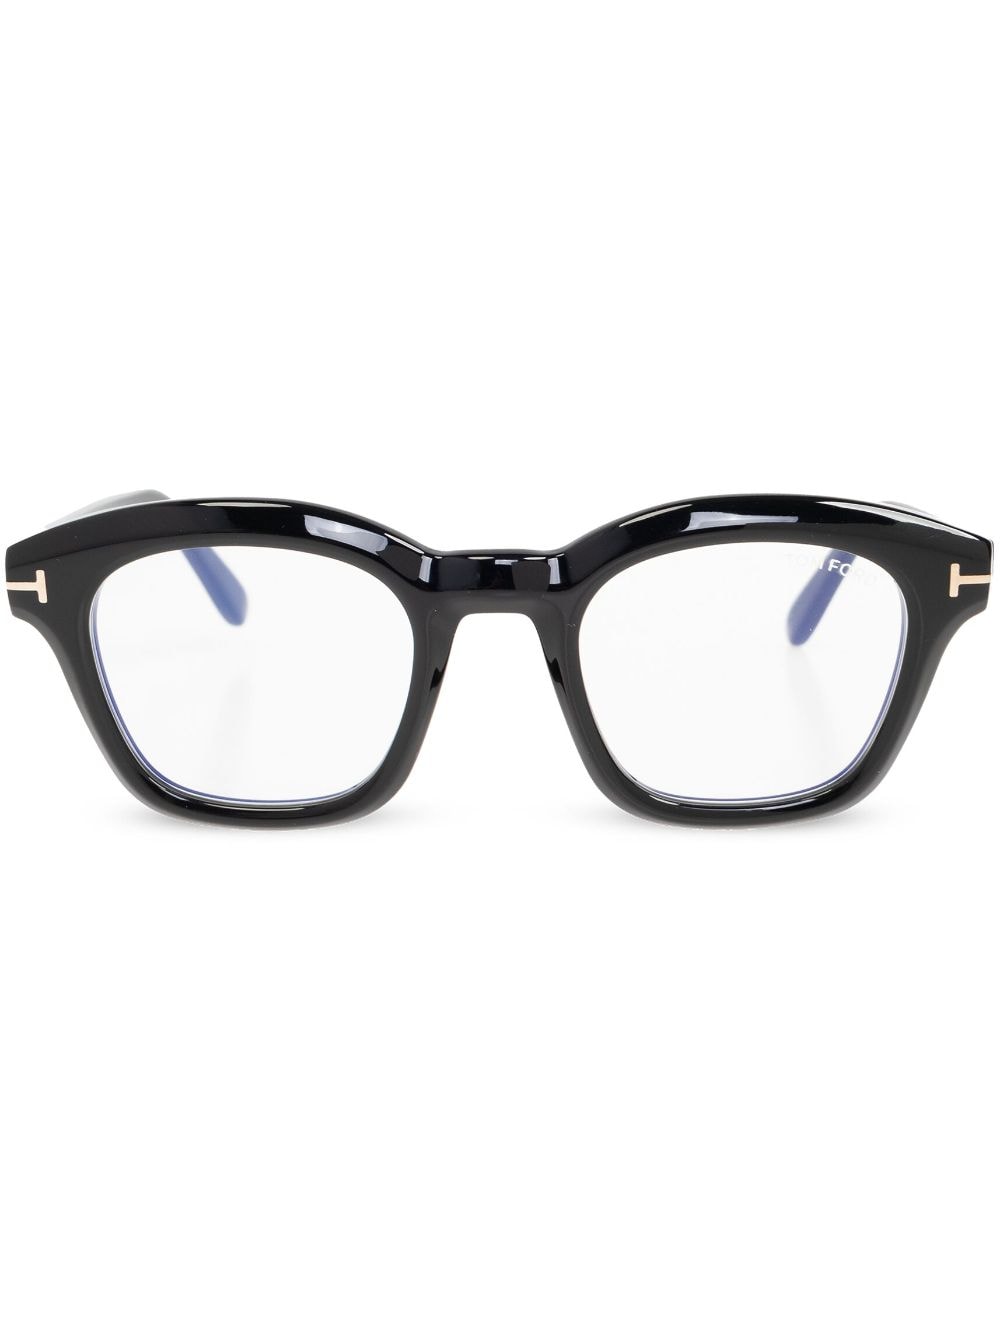 TOM FORD Eyewear FT5961-B square-frame glasses - Black von TOM FORD Eyewear